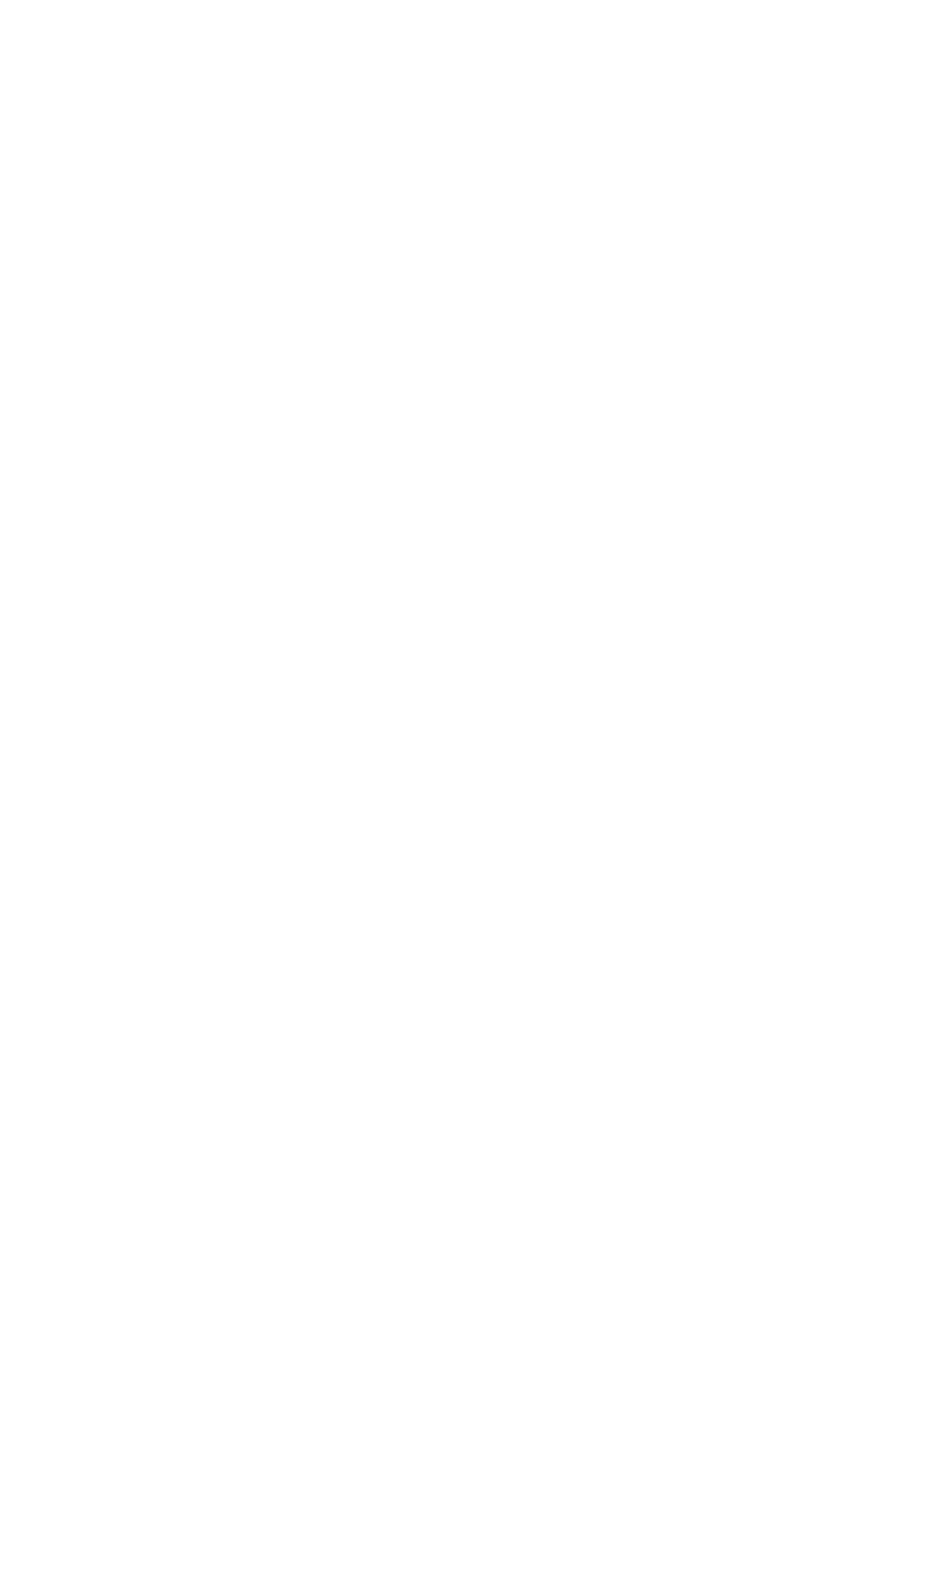 Bill.com logo for dark backgrounds (transparent PNG)